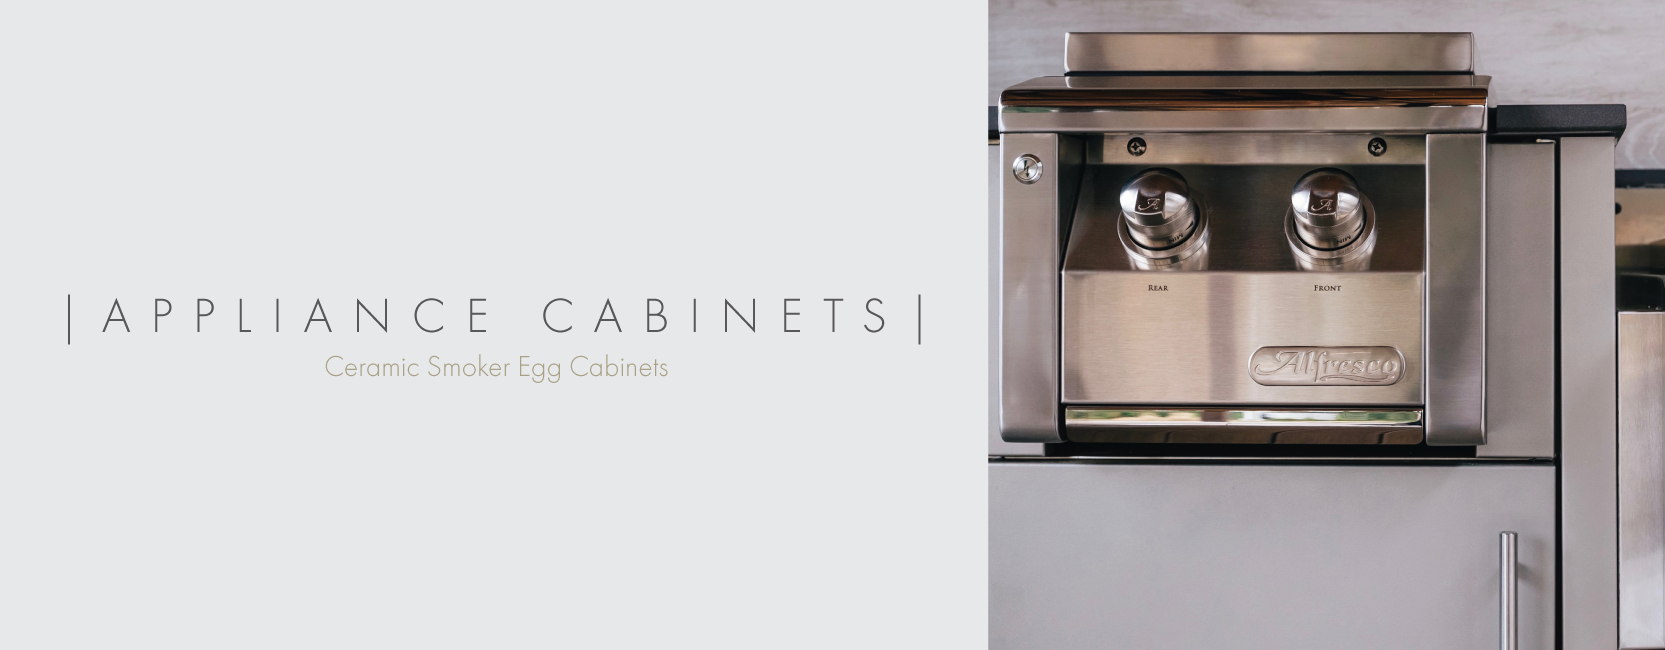 Ceramic Egg Smoker Appliance Cabinets